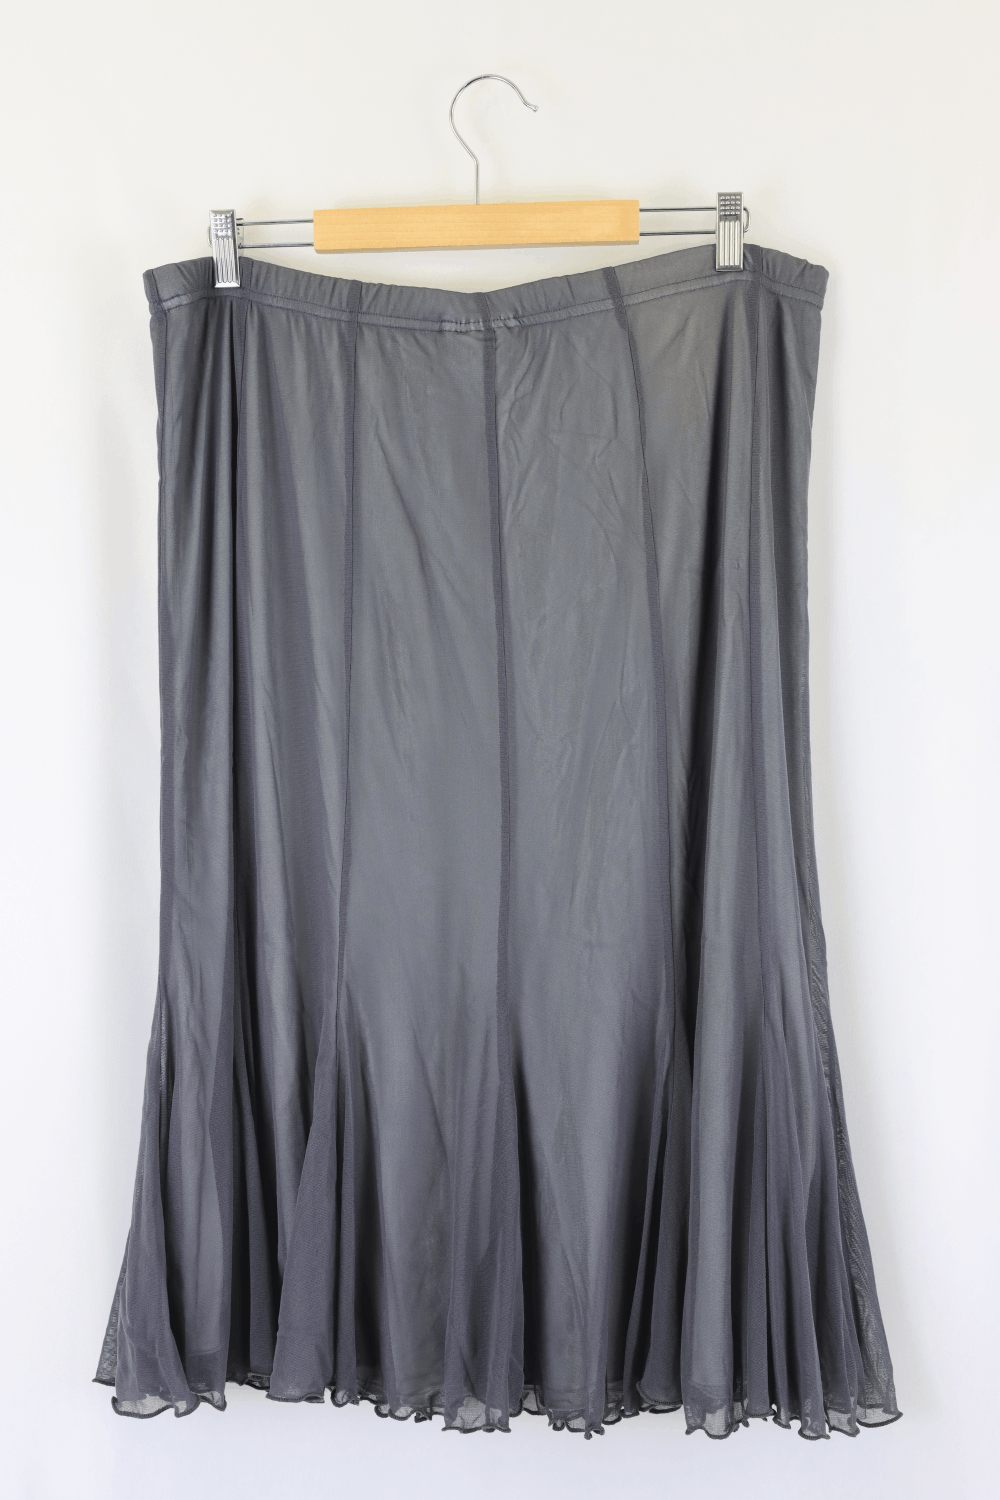 JK Fashion Grey Skirt 20